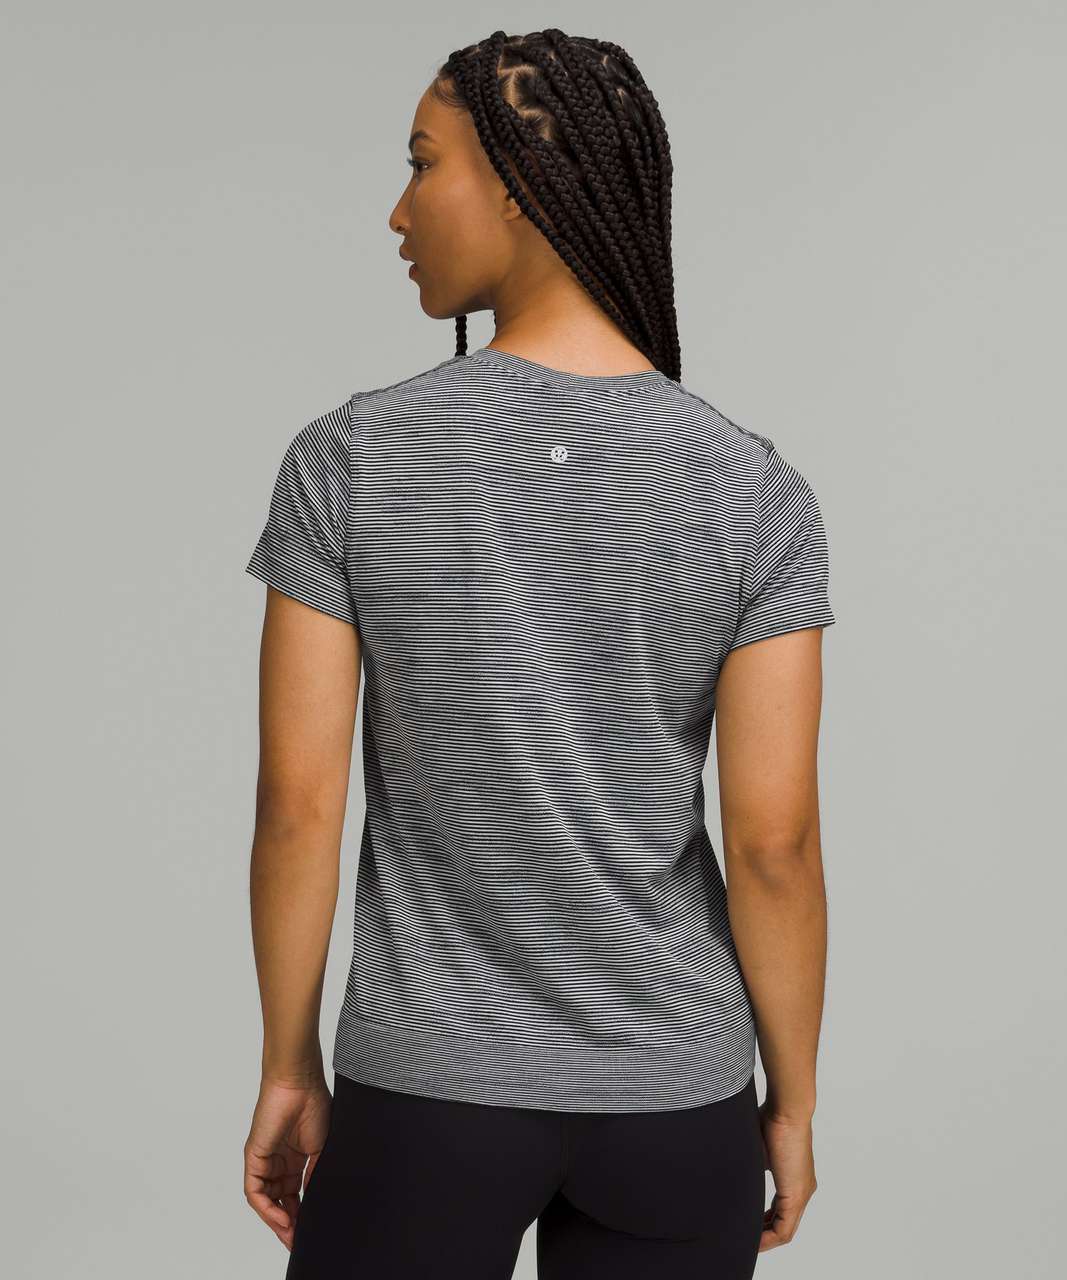 Lululemon Swiftly Relaxed Short Sleeve T-Shirt - Chroma Check Stripe Alpine White / Black / Grey Multi